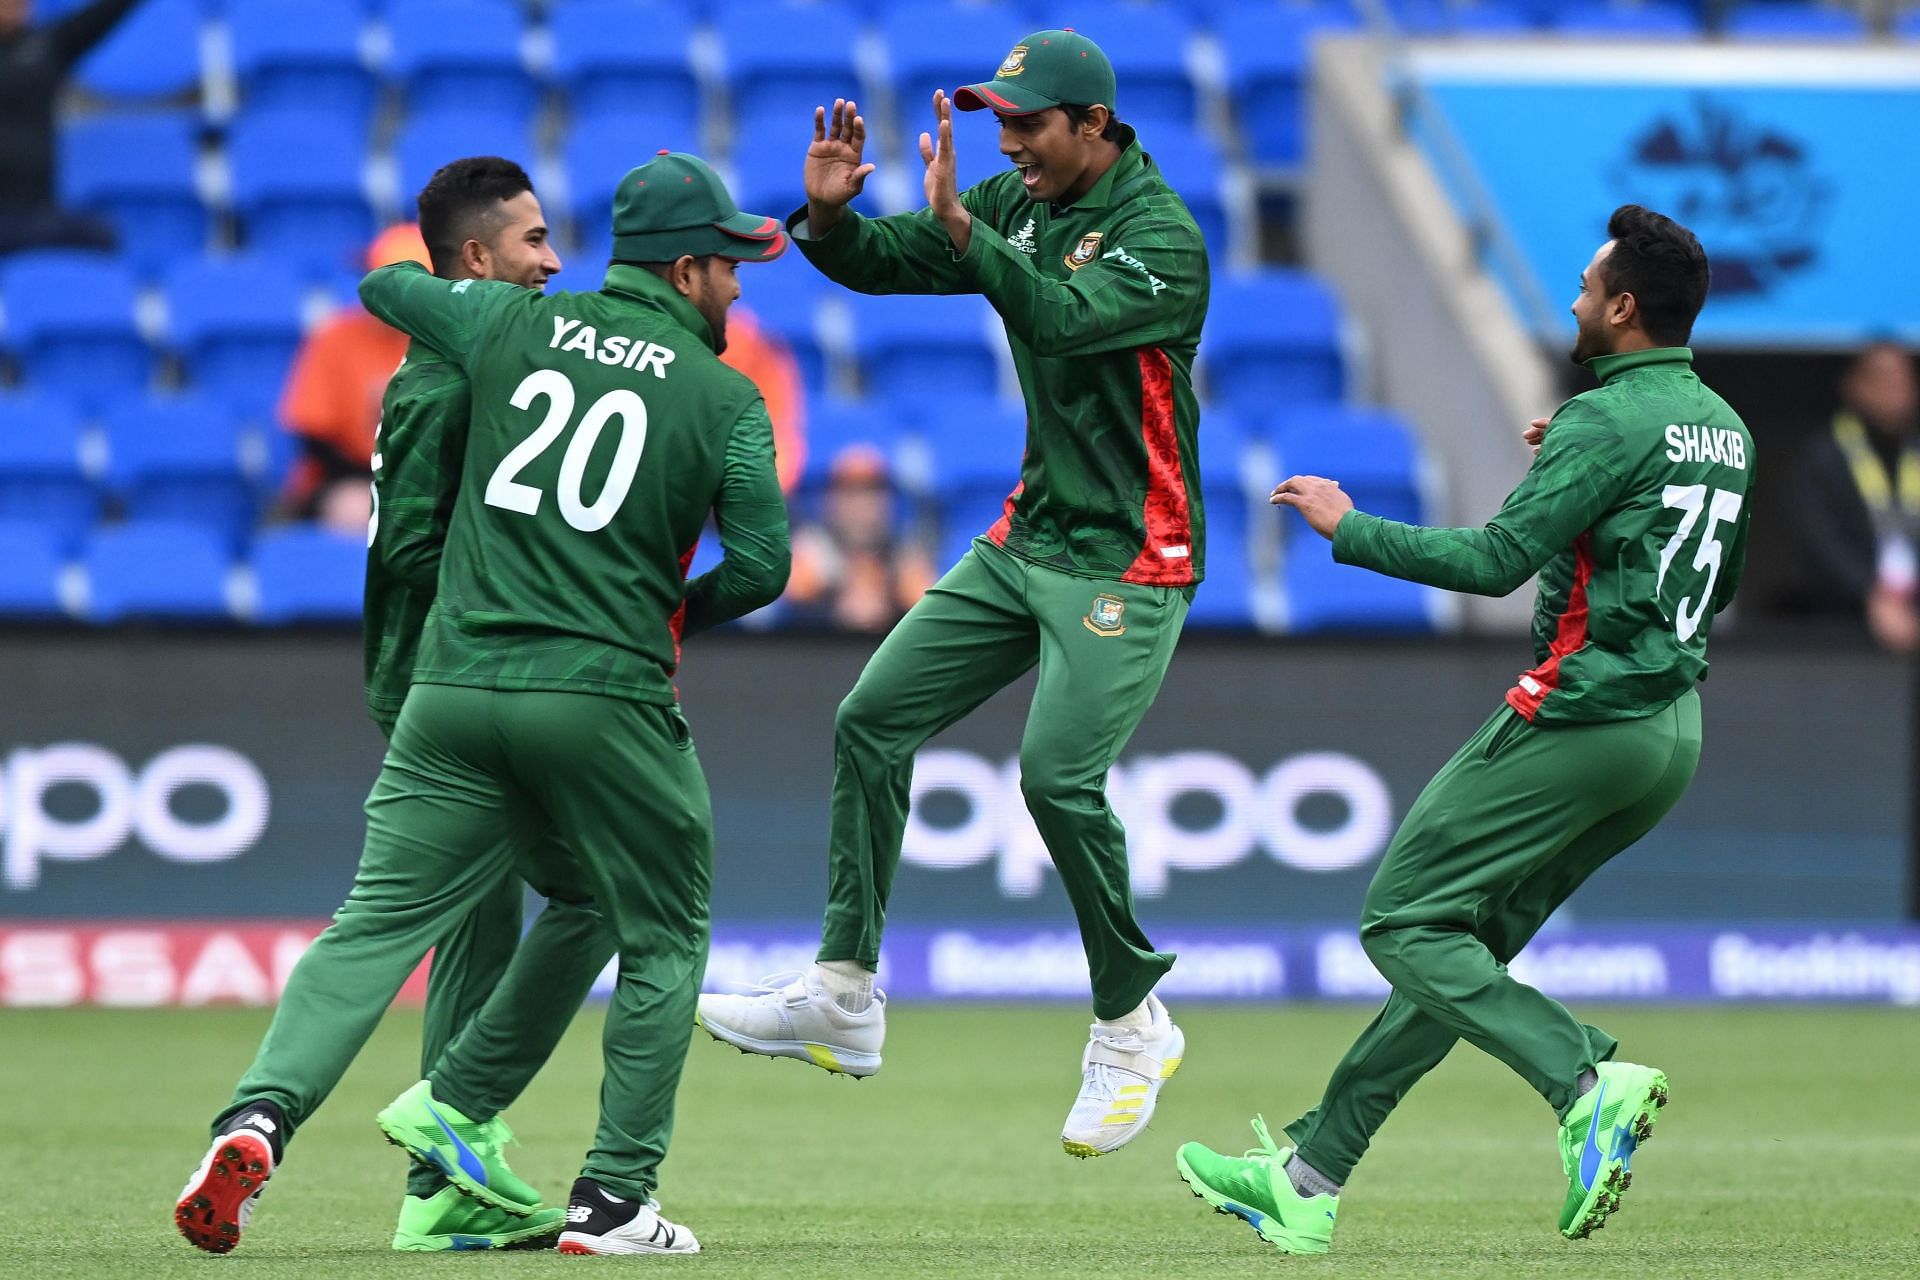 Bangladesh won by nine runs in their first Super 12 fixture. (Credits: Twitter)